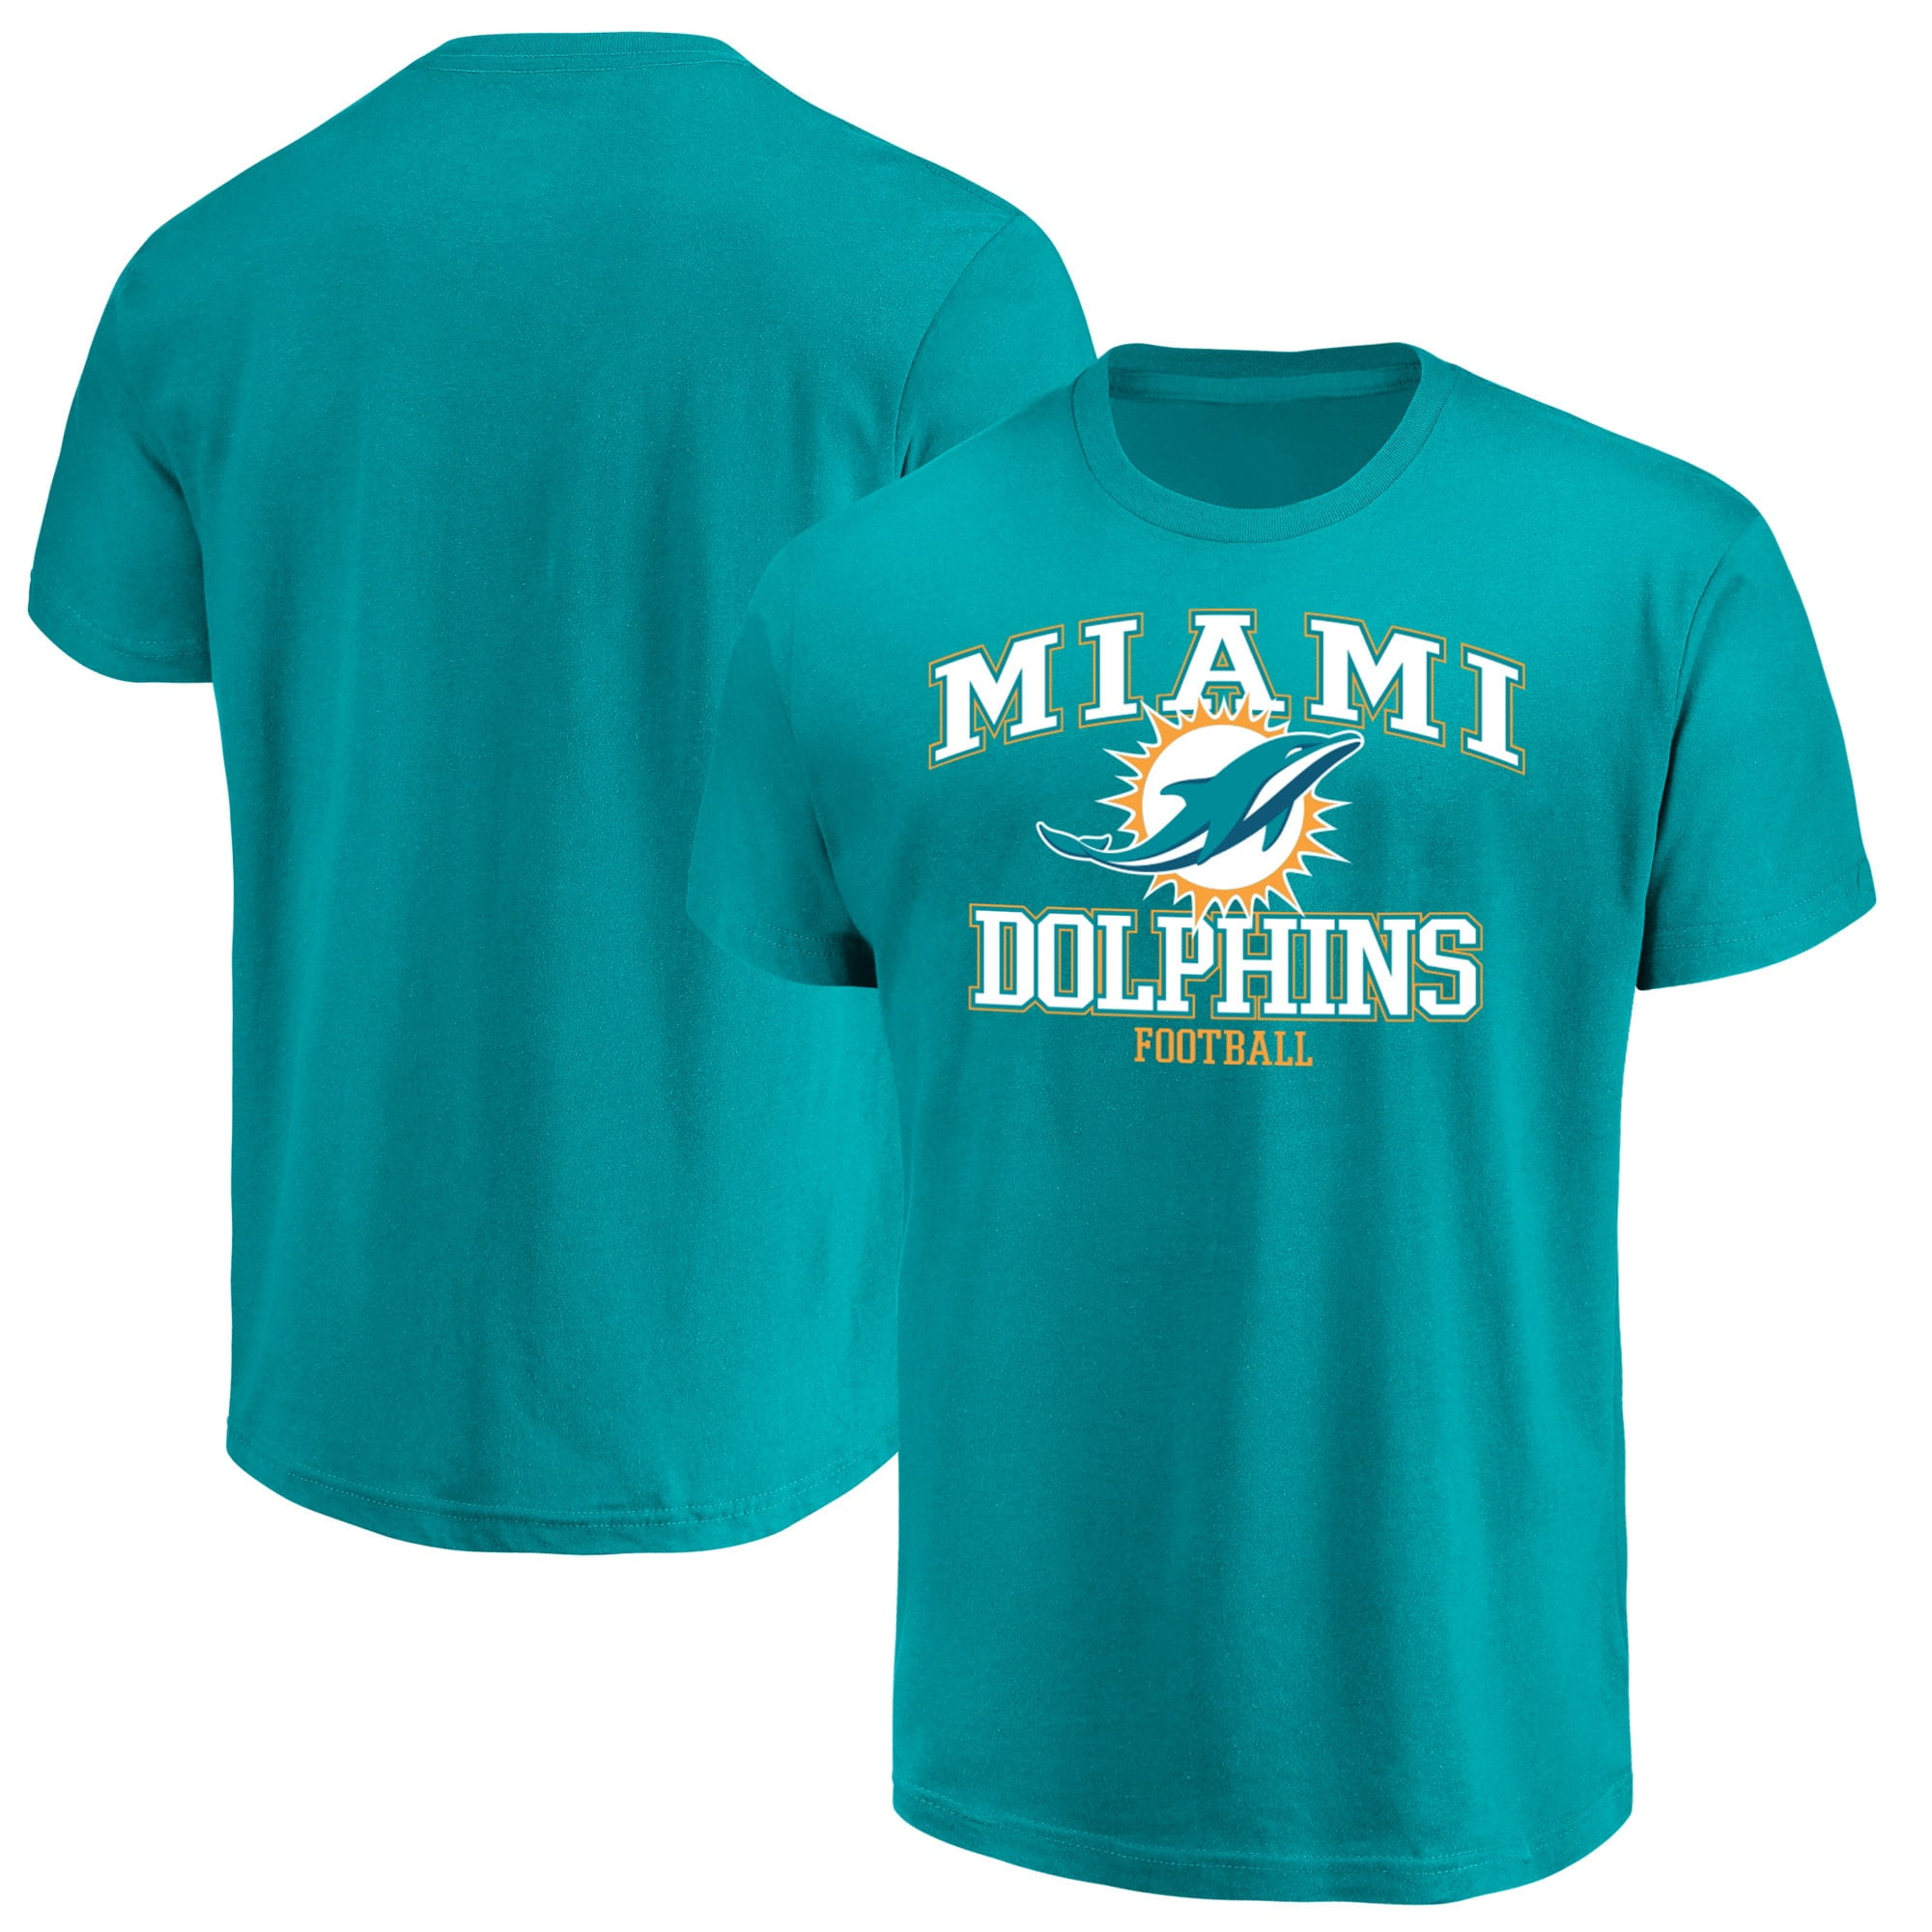 miami dolphins merchandise cheap